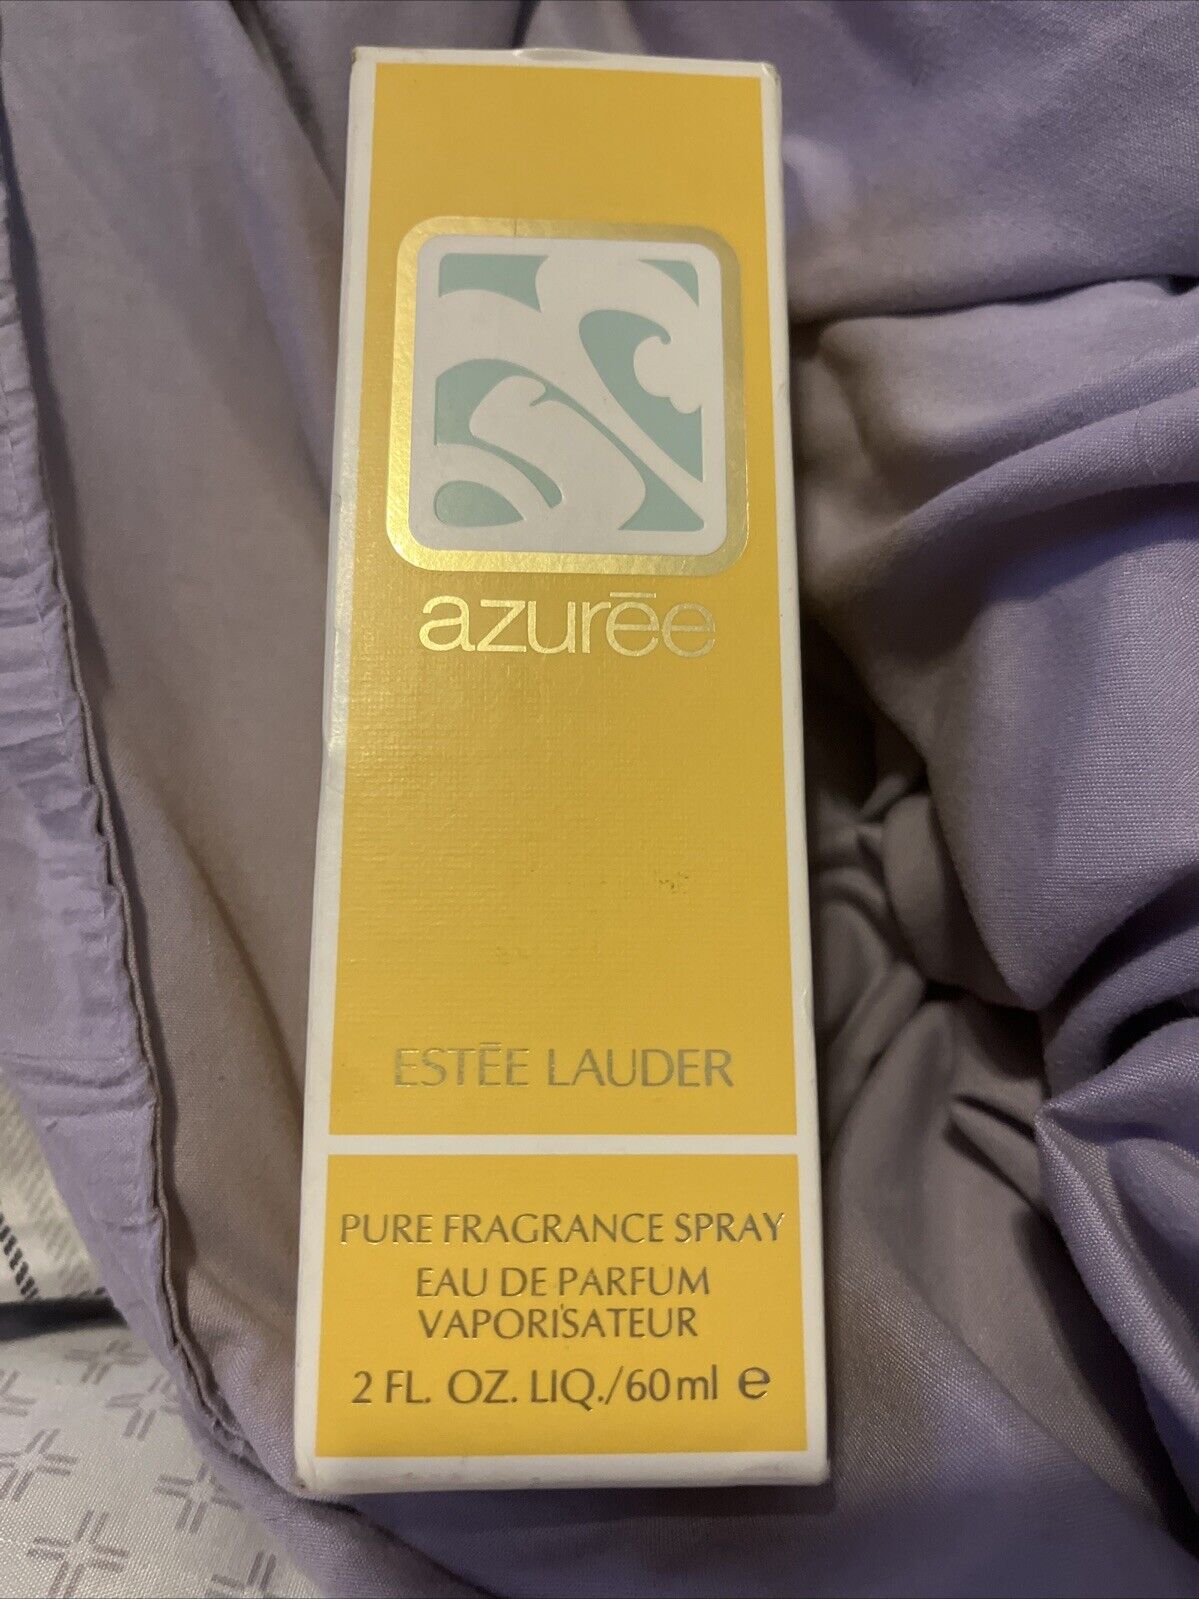 Vintage Estee Lauder Azuree Pure Fragrance Spray Perfume For Women 2 oz / 60ml